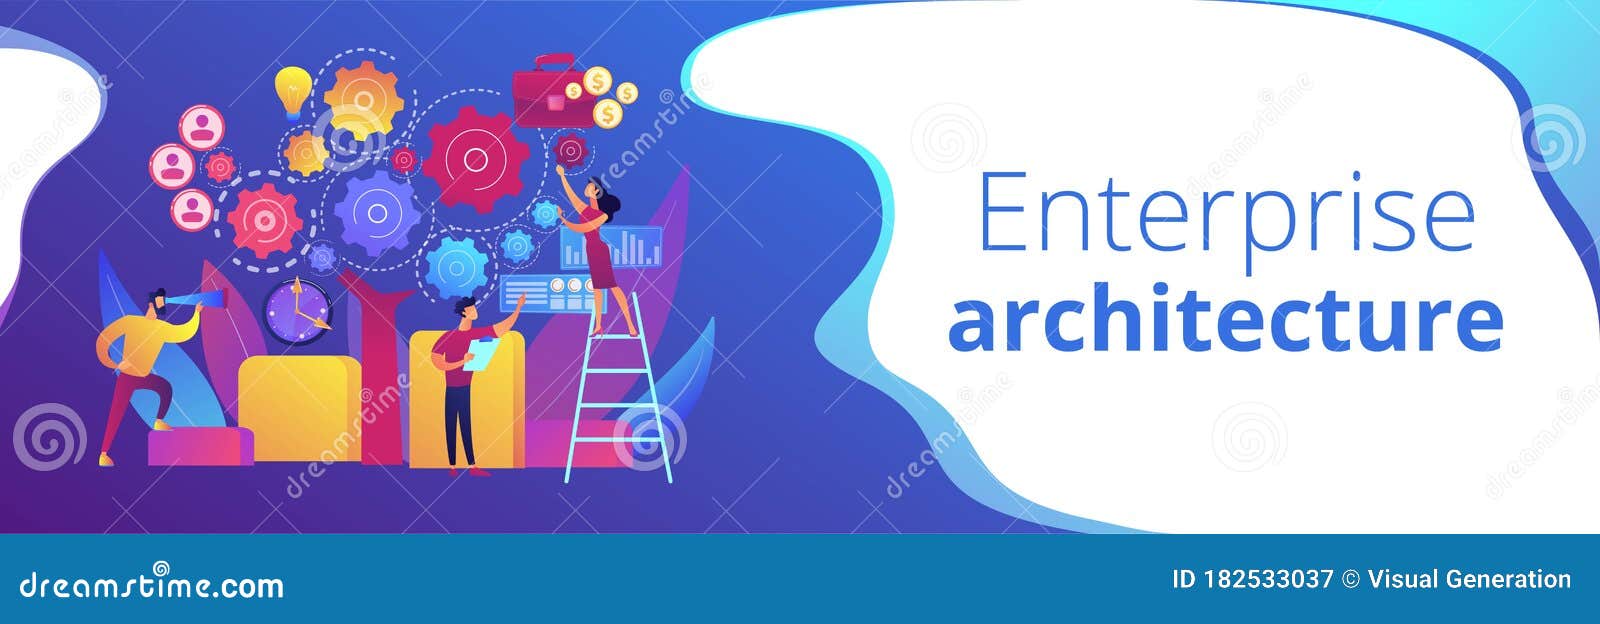 enterprise architecture concept banner header